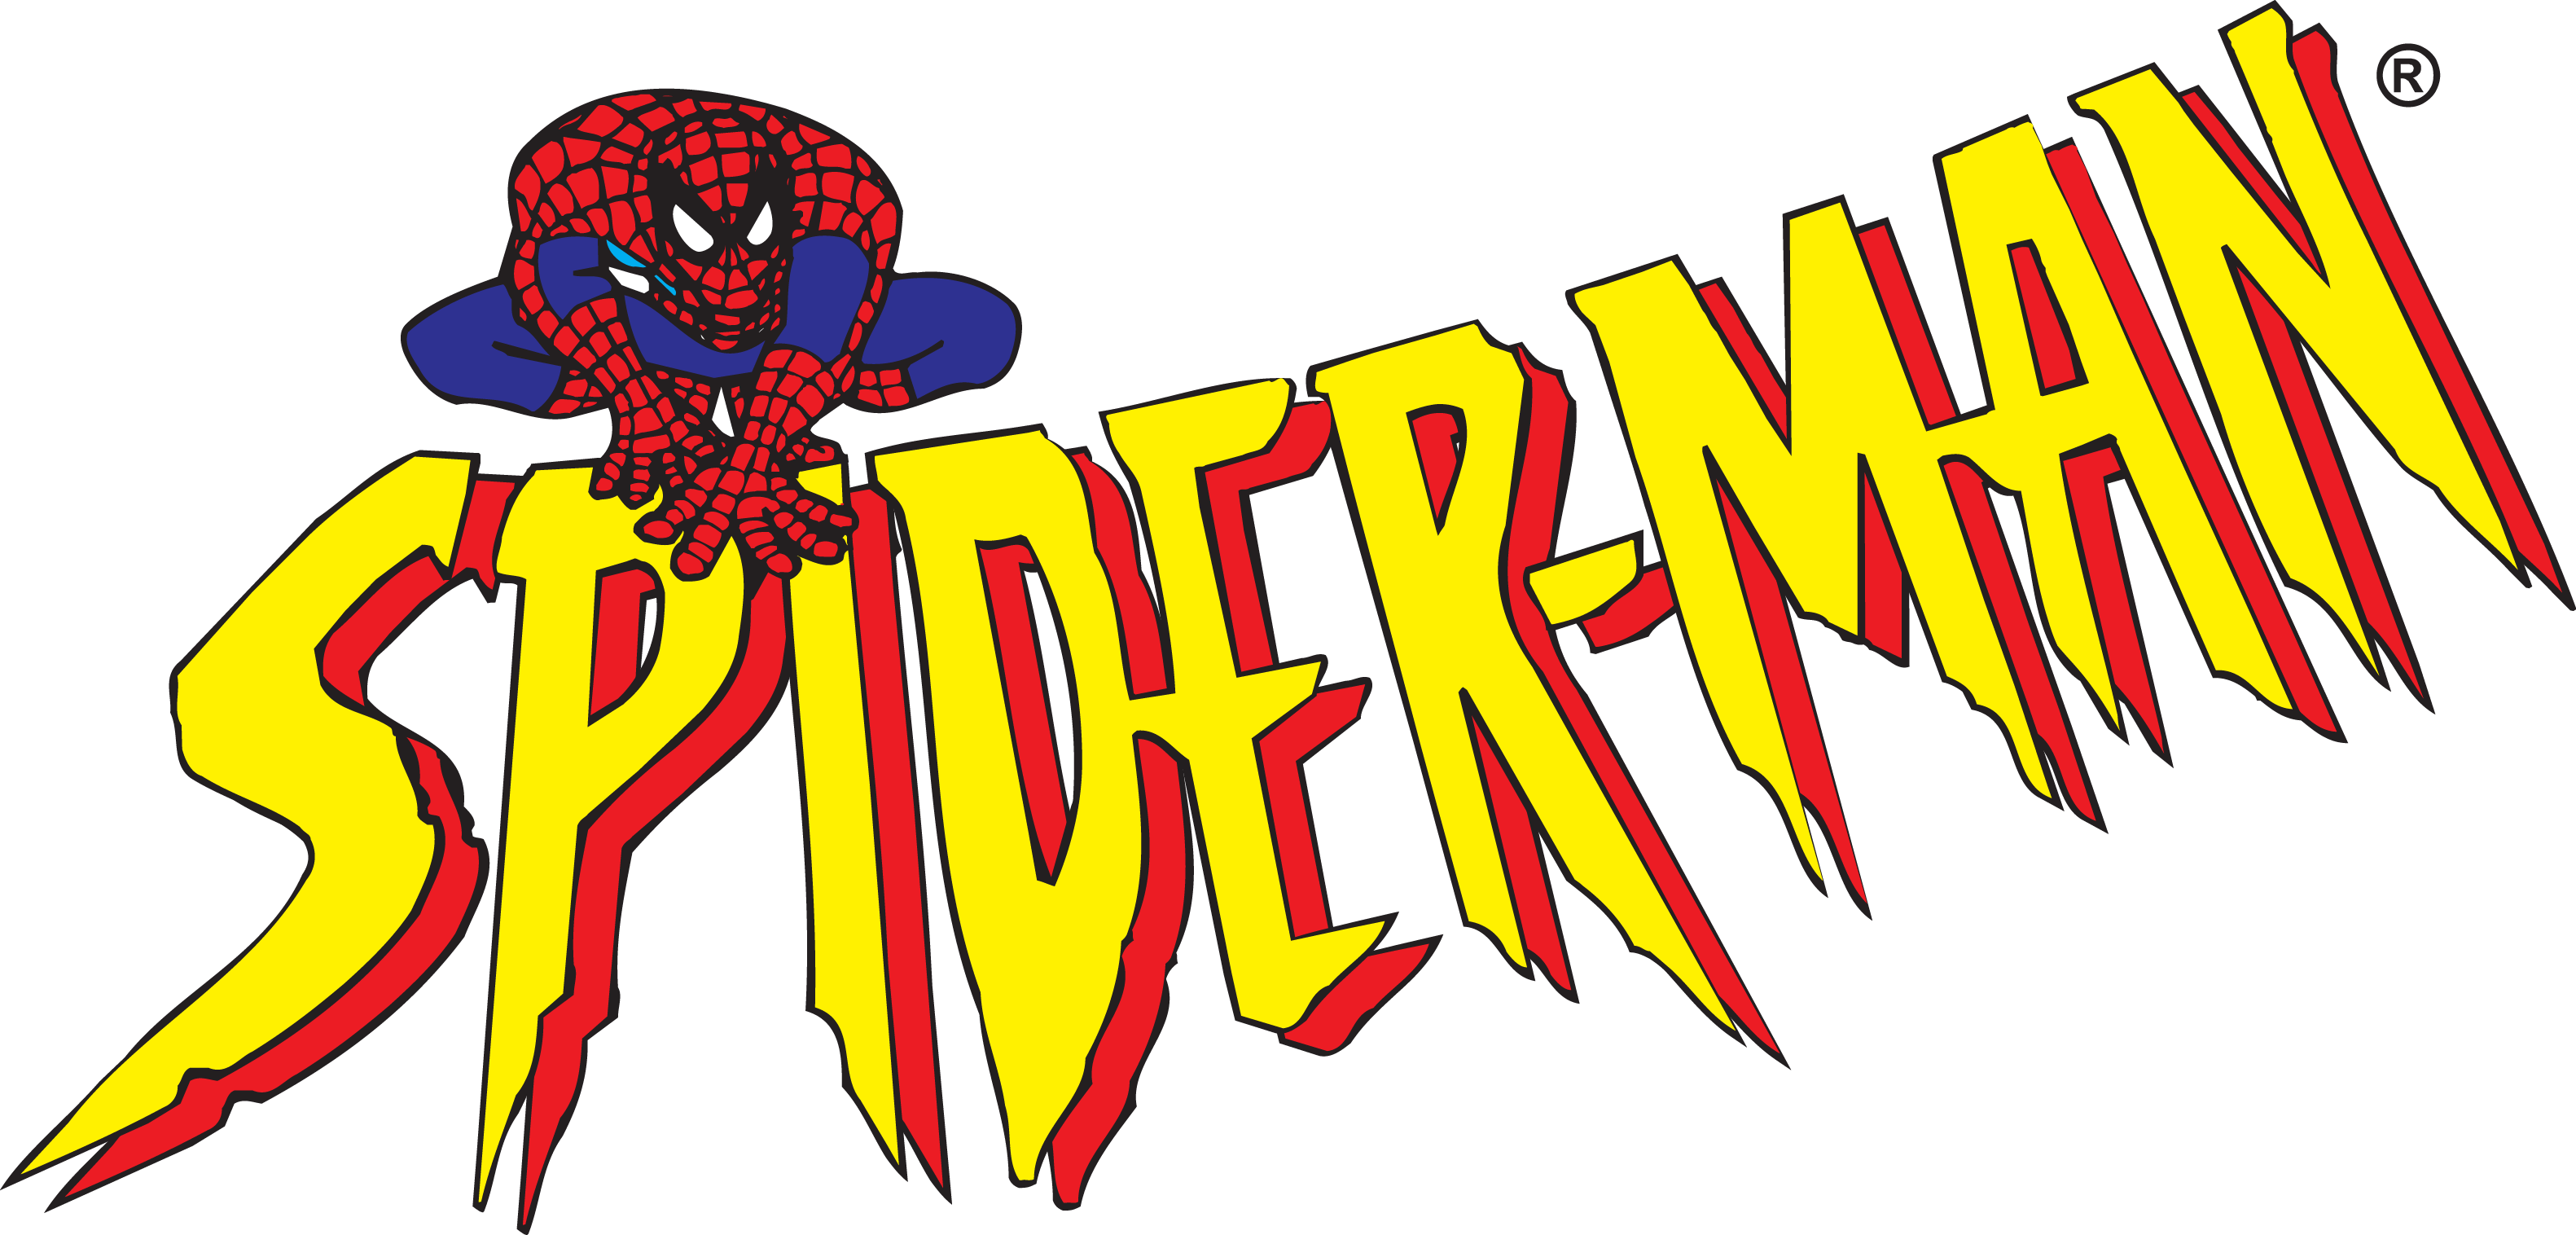 Spider-man-logo1.png